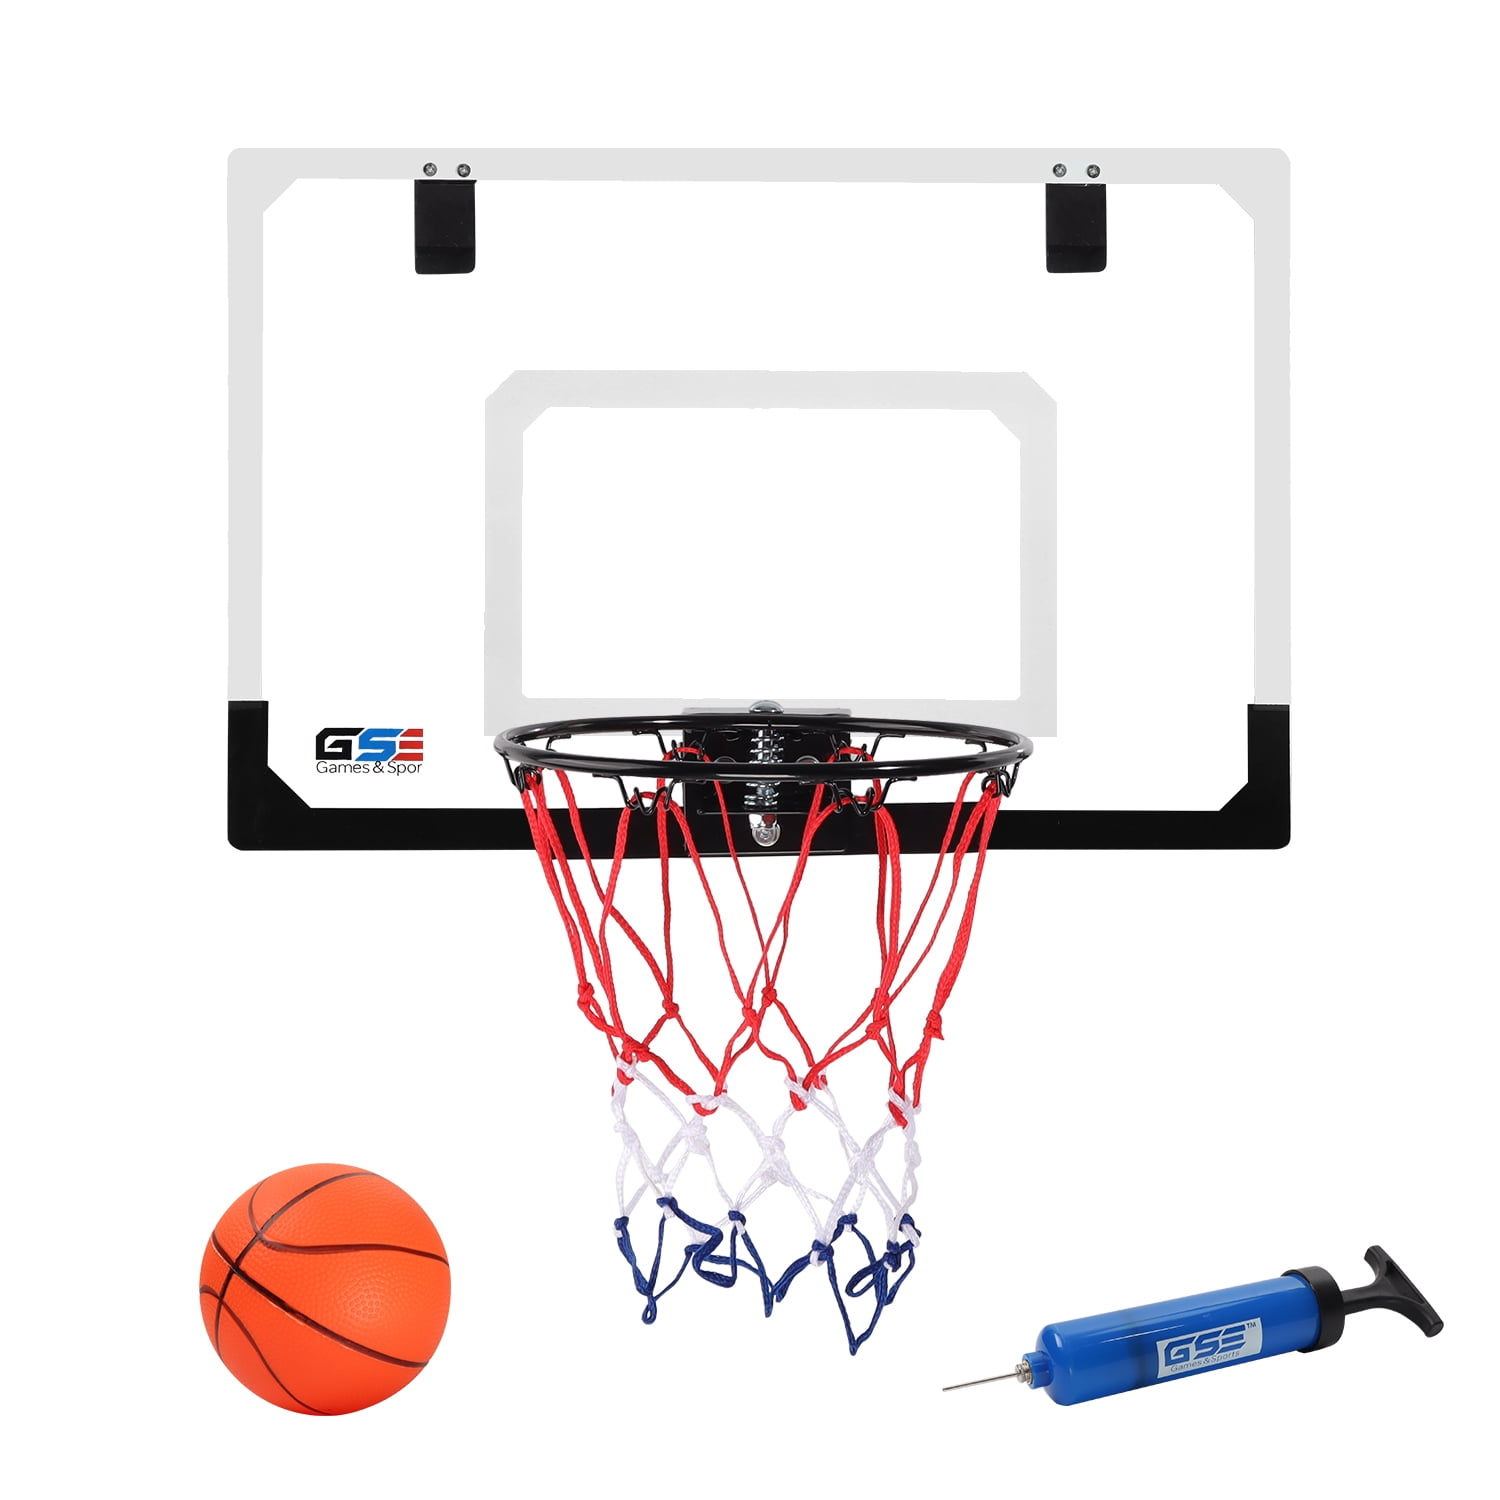 mini wall mount kids indoor basketball hoop